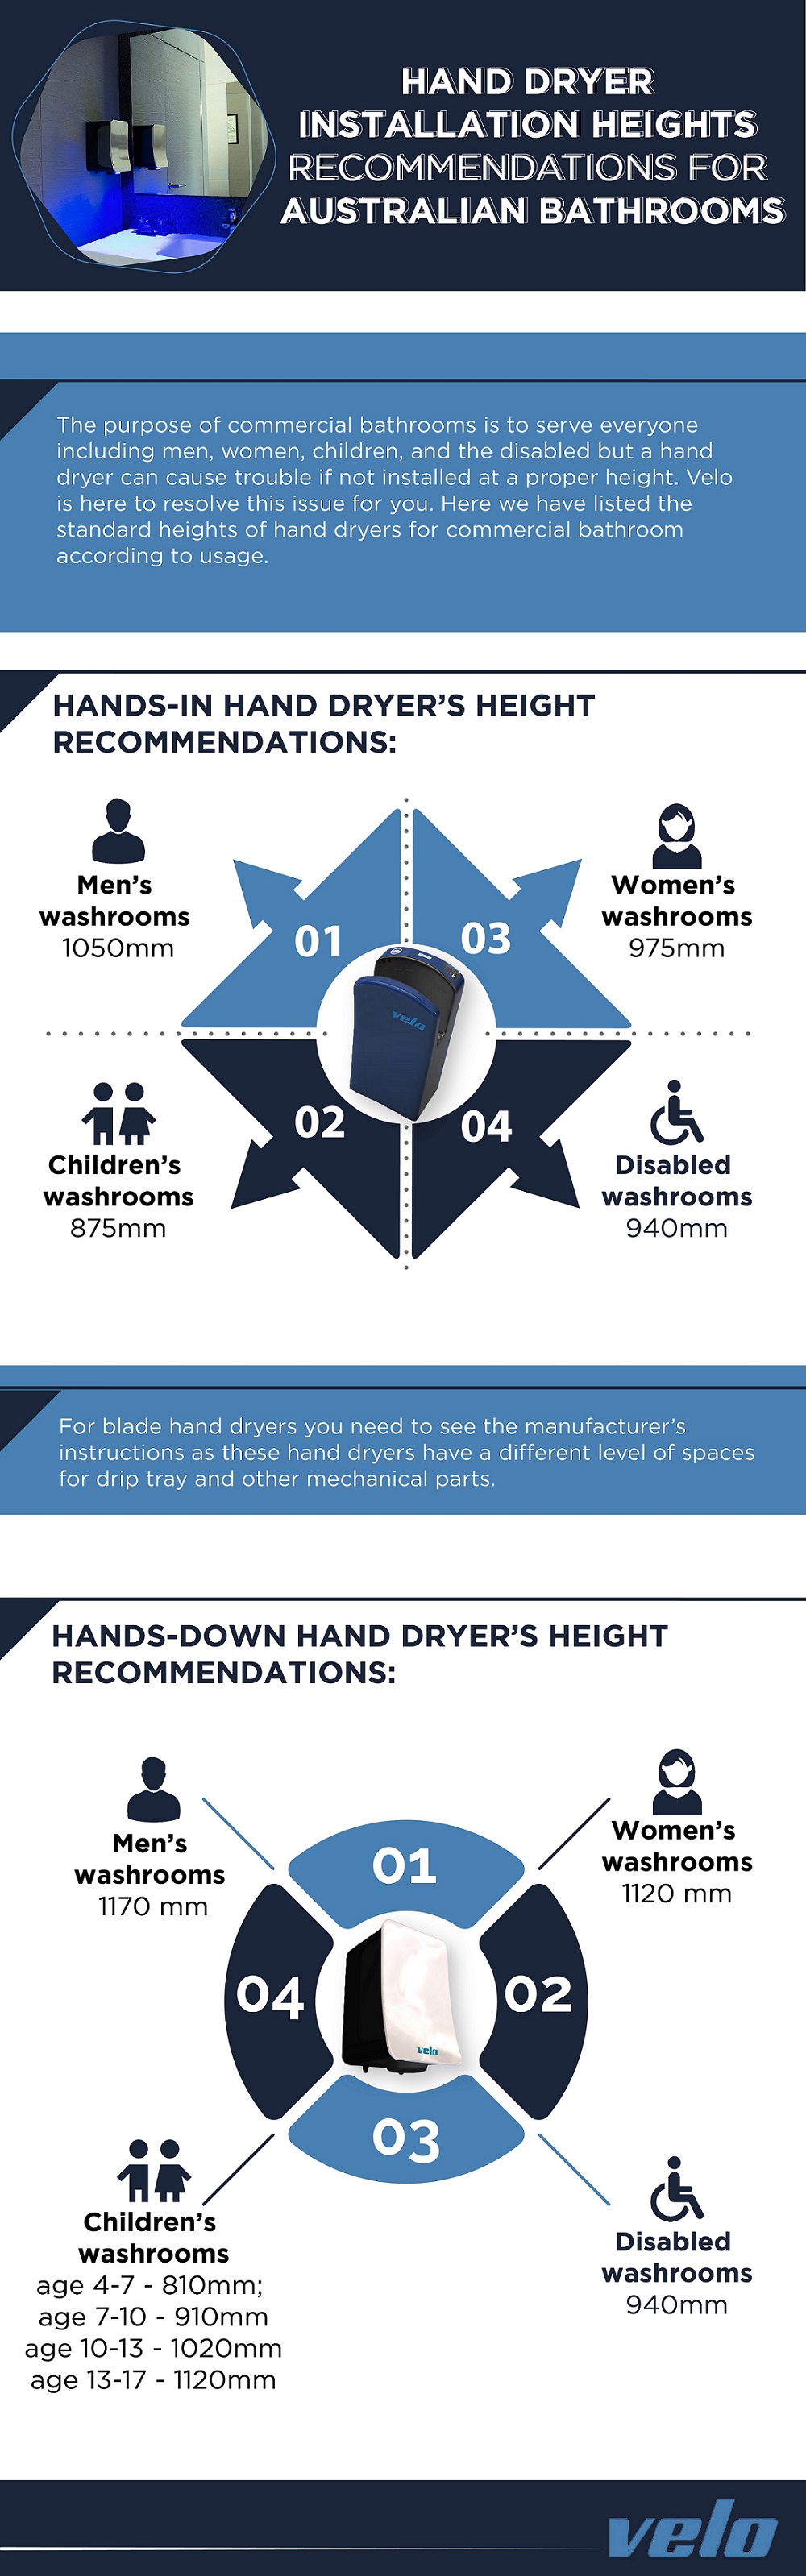 hand dryer heights